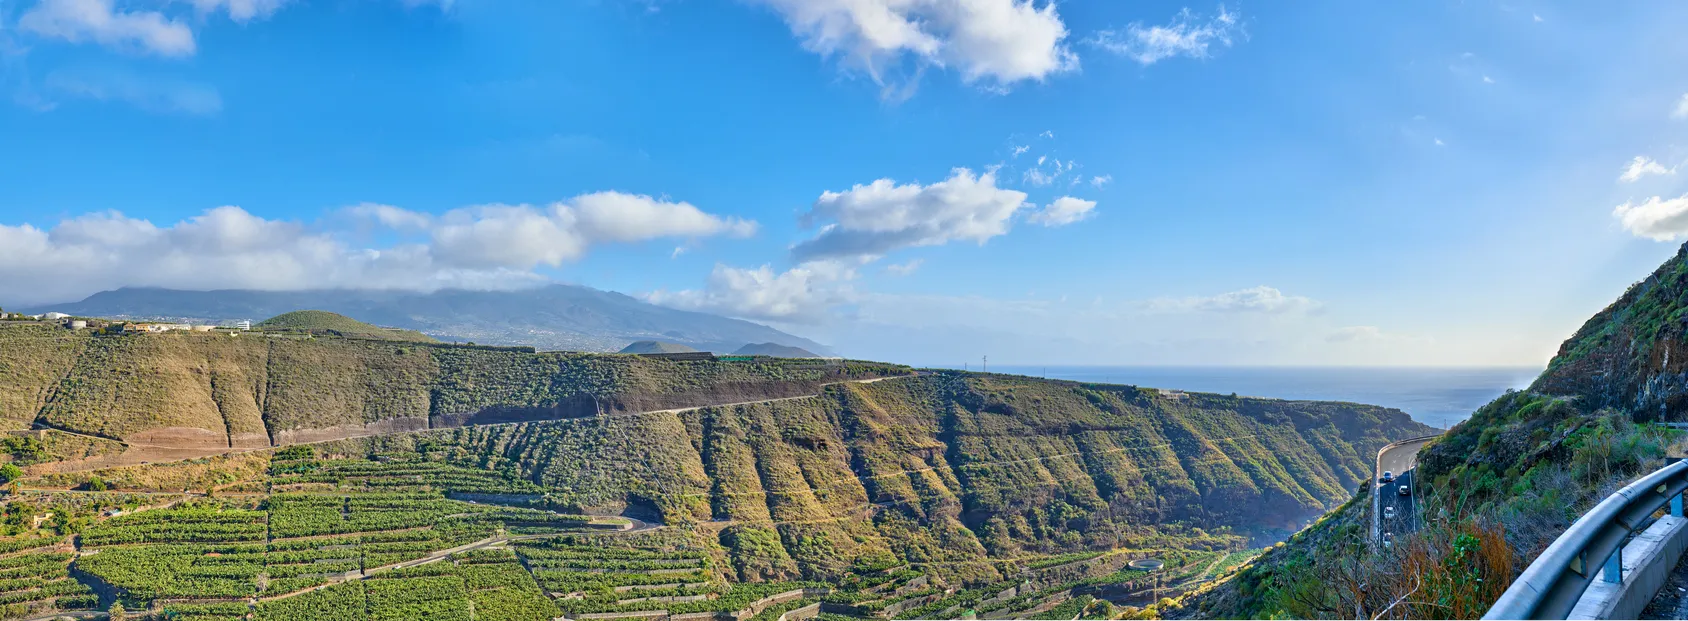 Bananeraies près de Los Llanos, île de La Palma, Canaries, Espagne  © iStock / Dhoxax